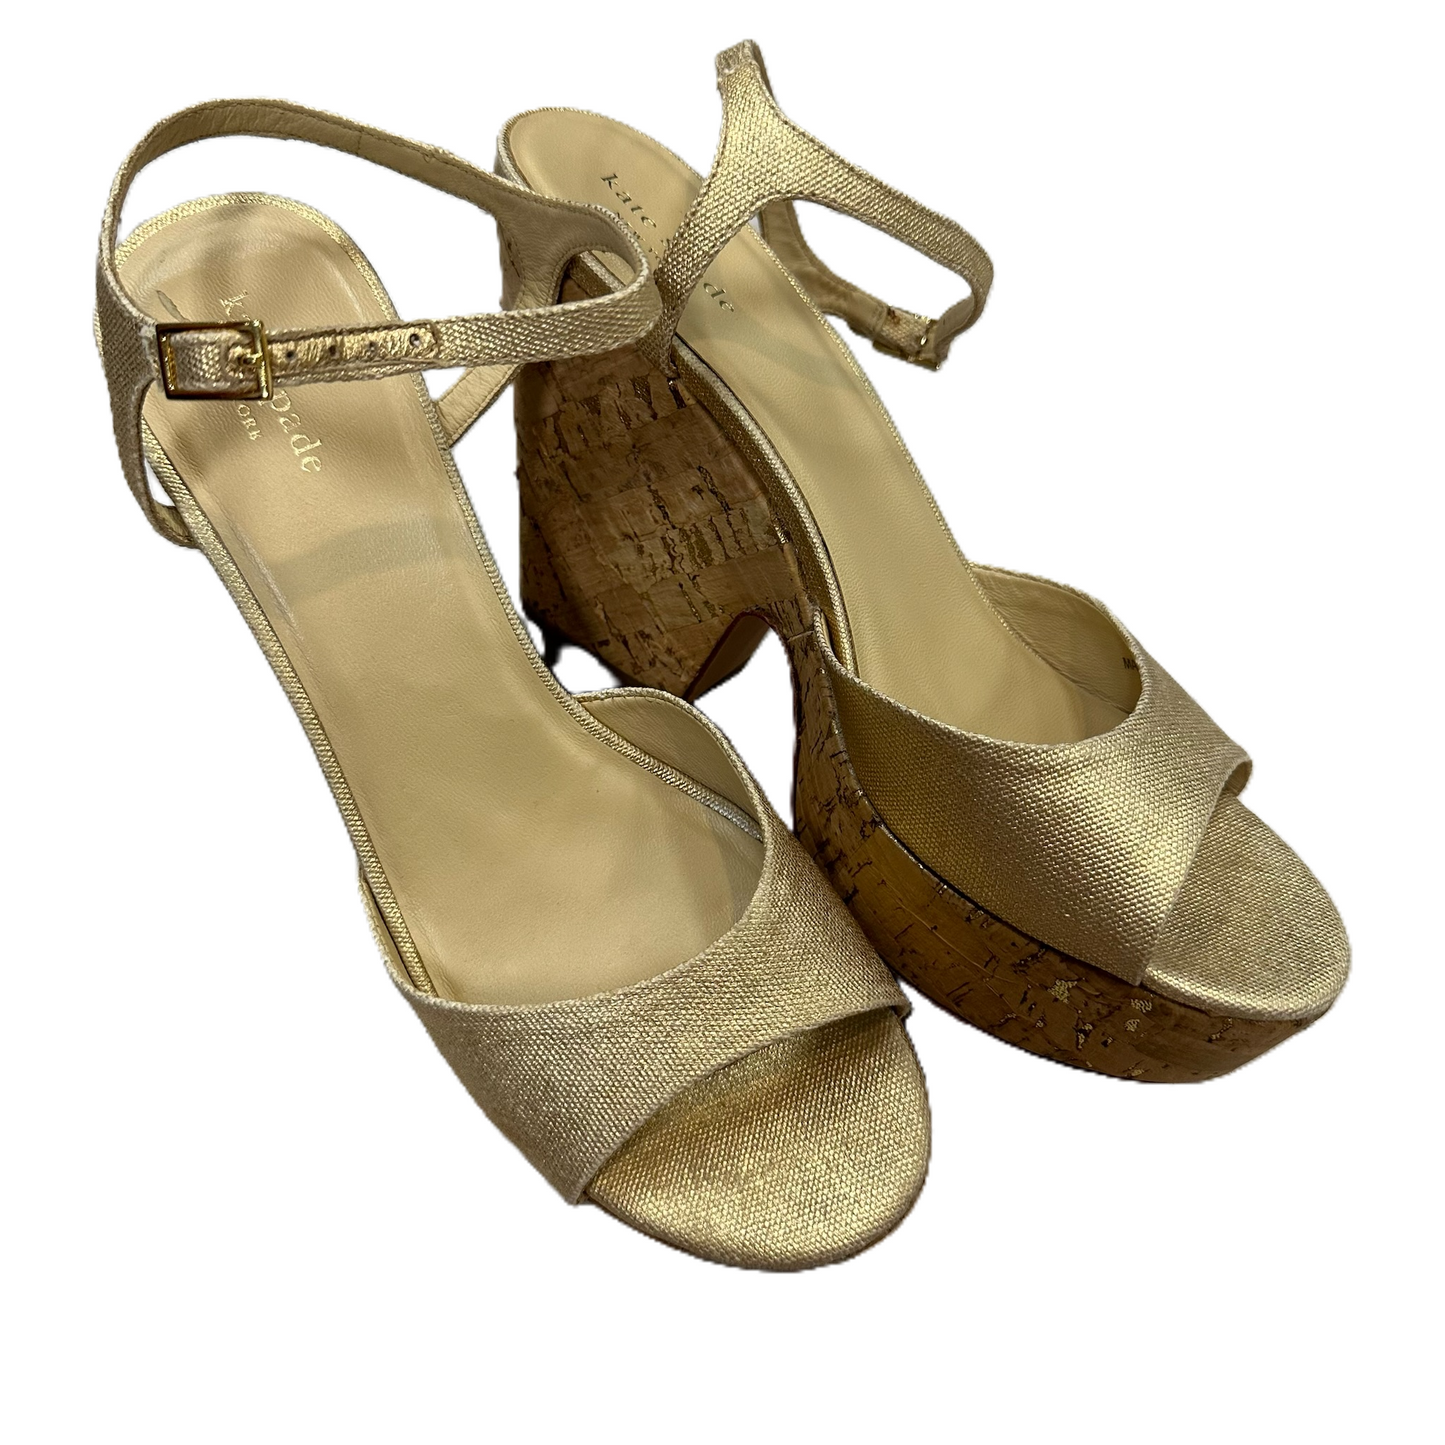 Tan Sandals Designer By Kate Spade, Size: 9.5